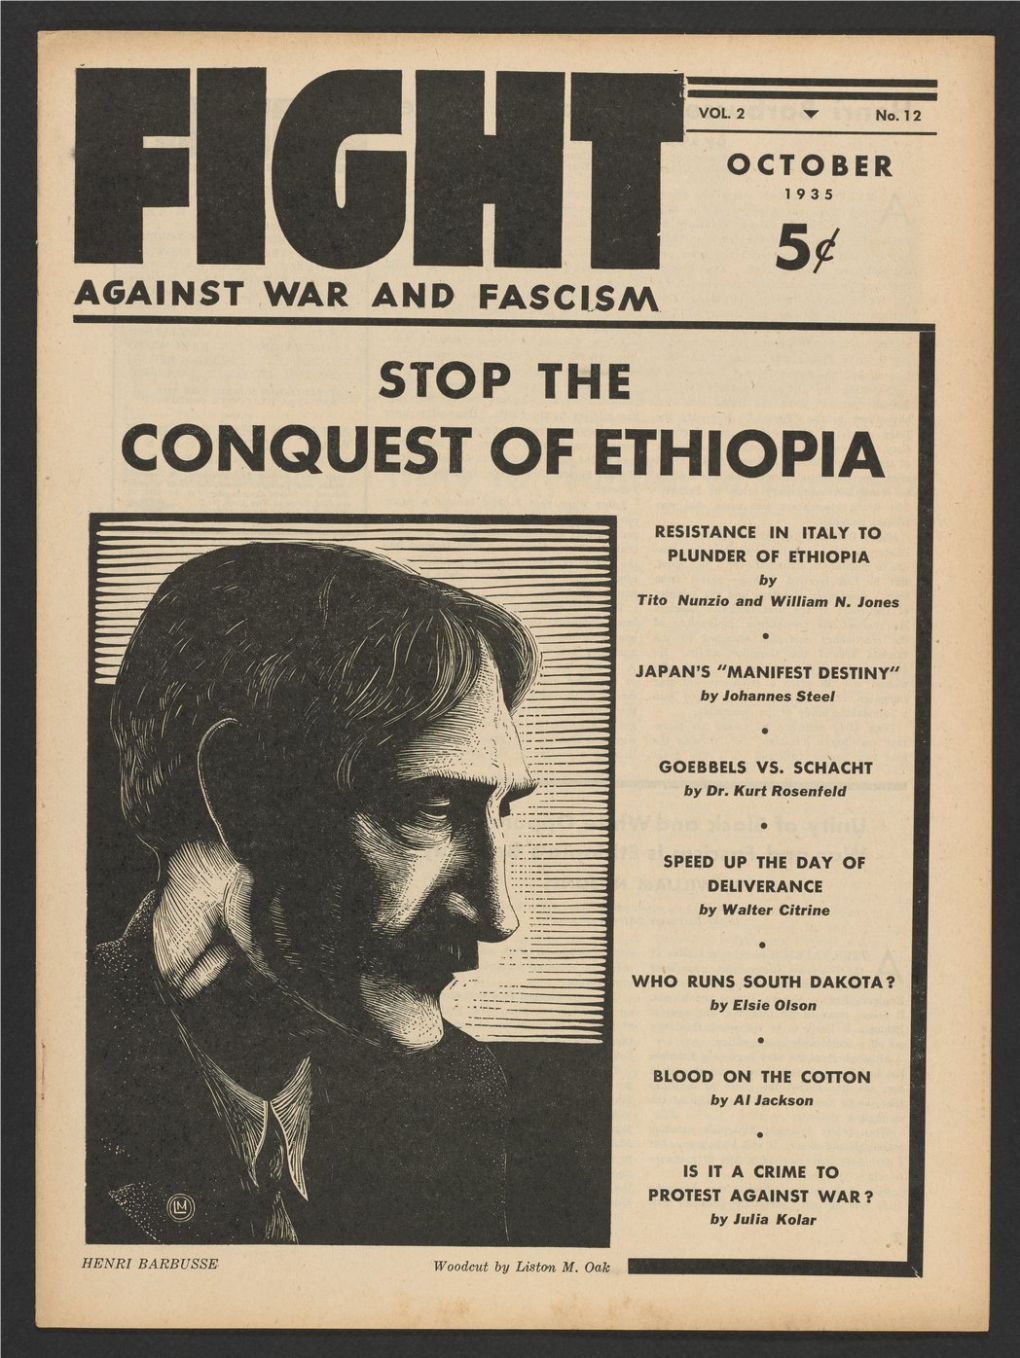 Stop the Conquest of Ethiopia